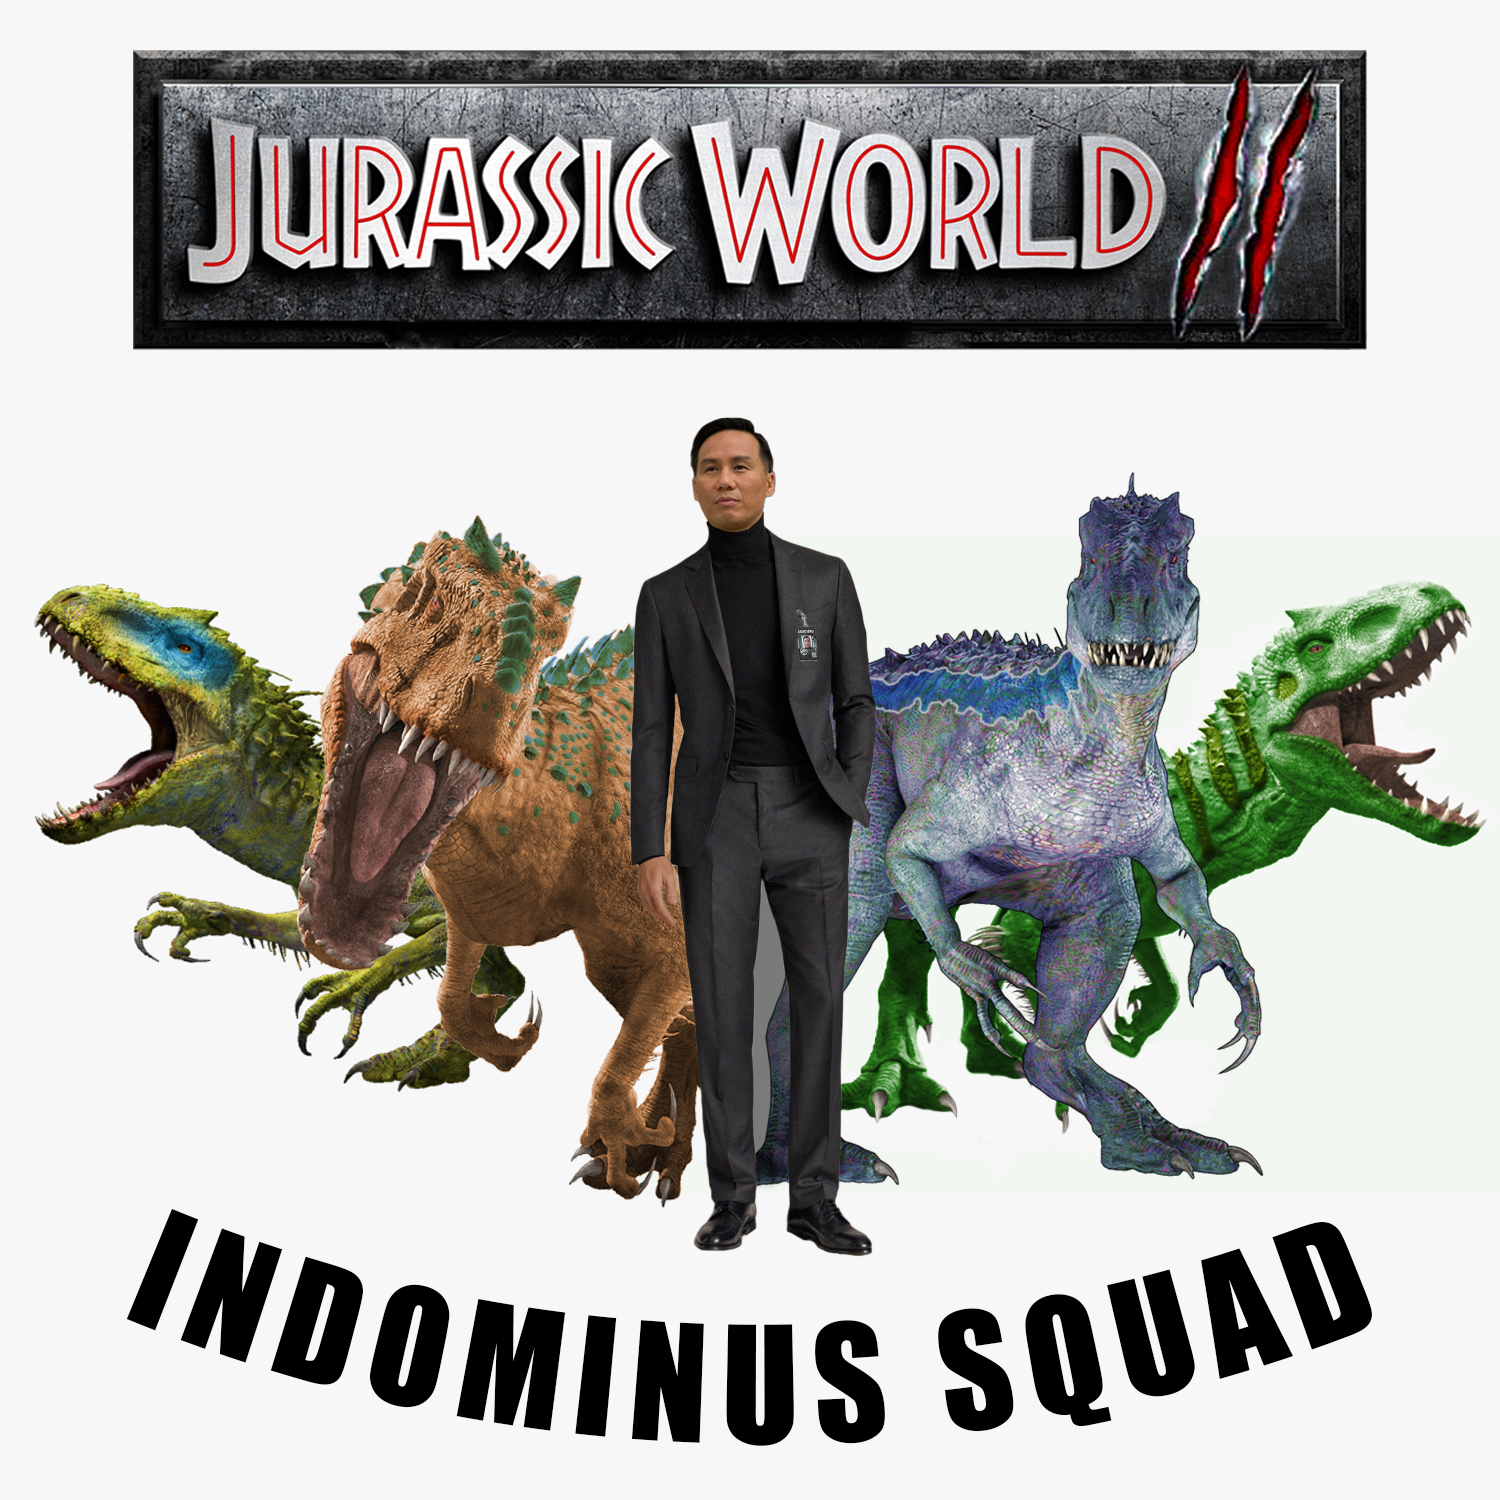 Indominus Squad - Jurassic World 2 by The-ARC-Minister on DeviantArt